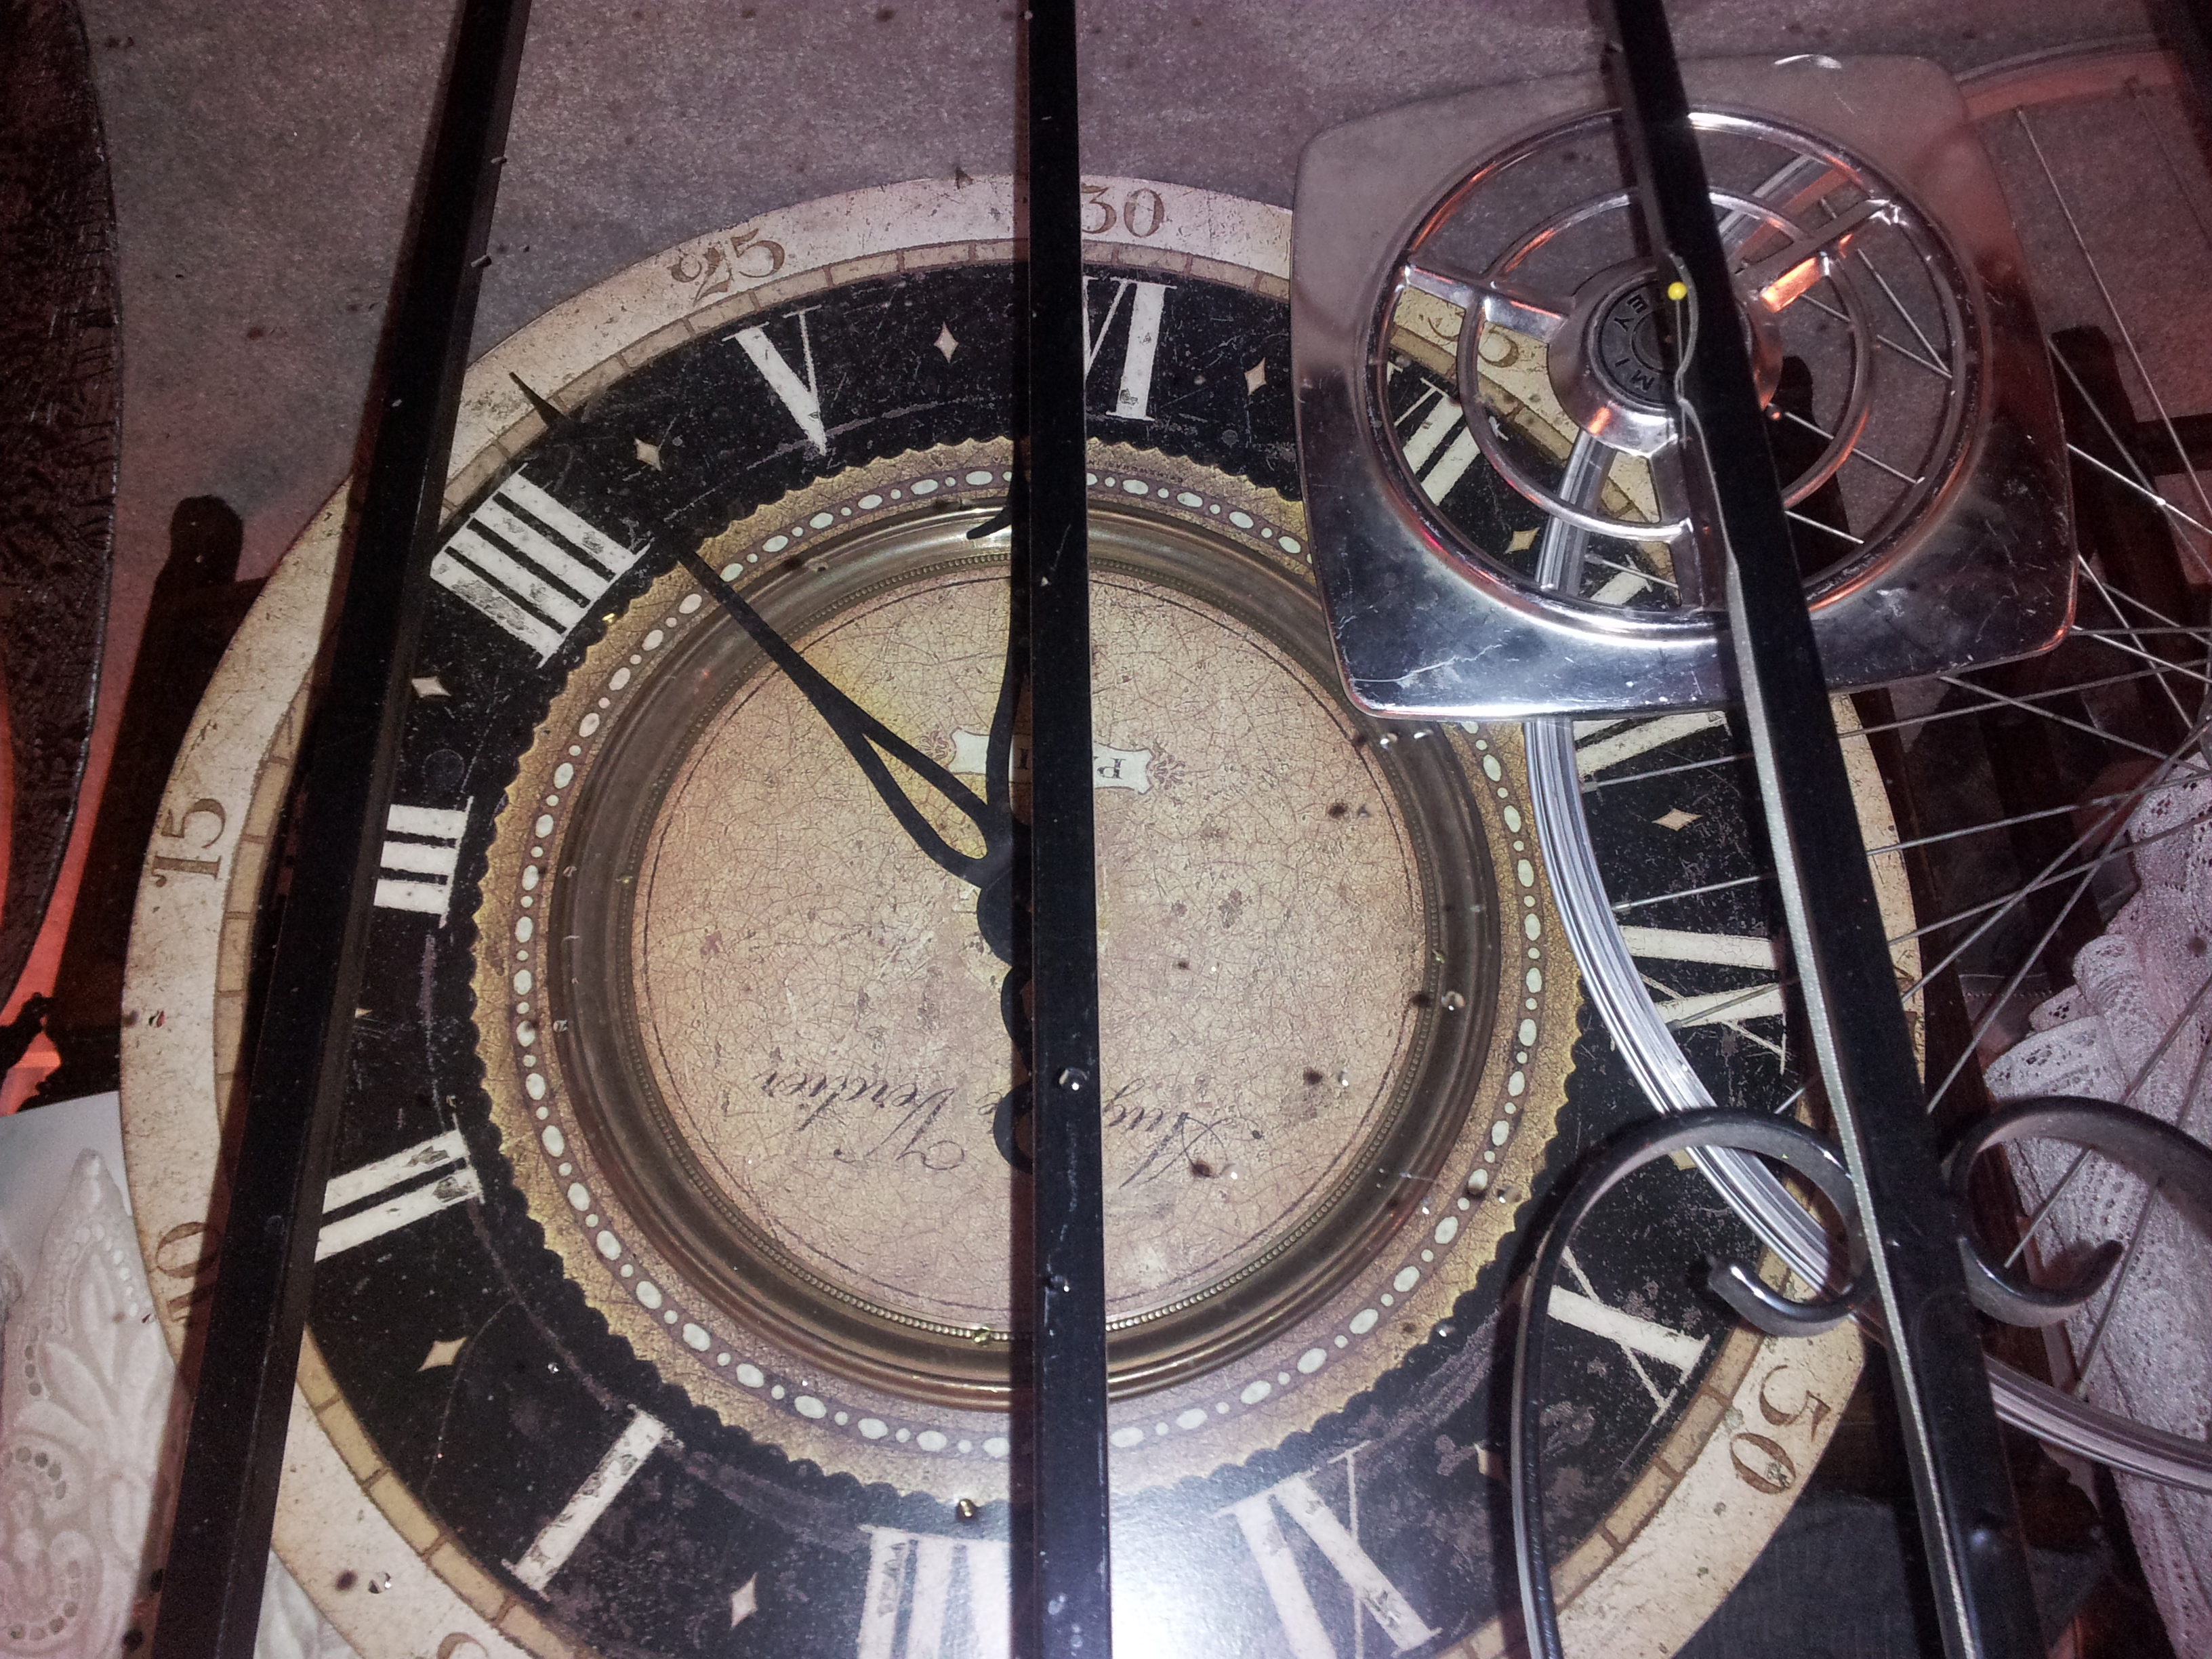 Antique Clock on the ground